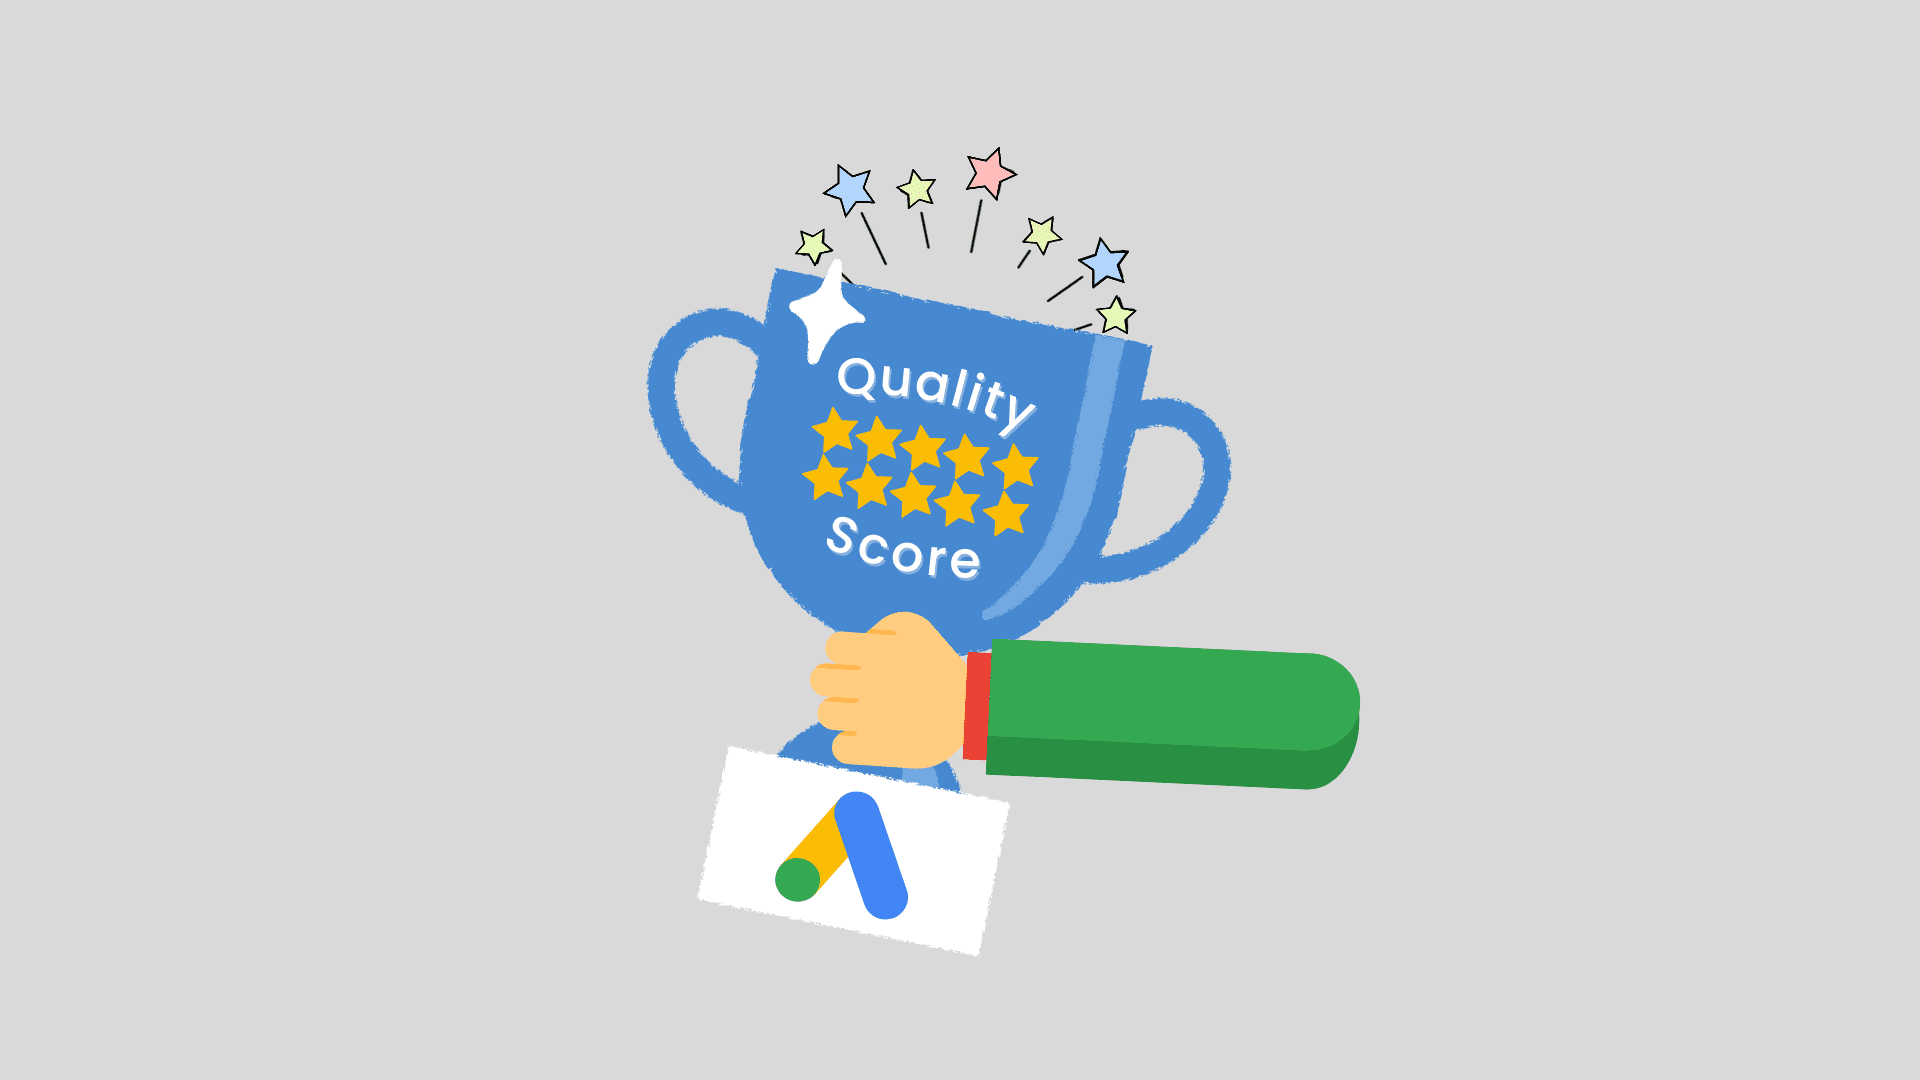 Google Ads Quality Score